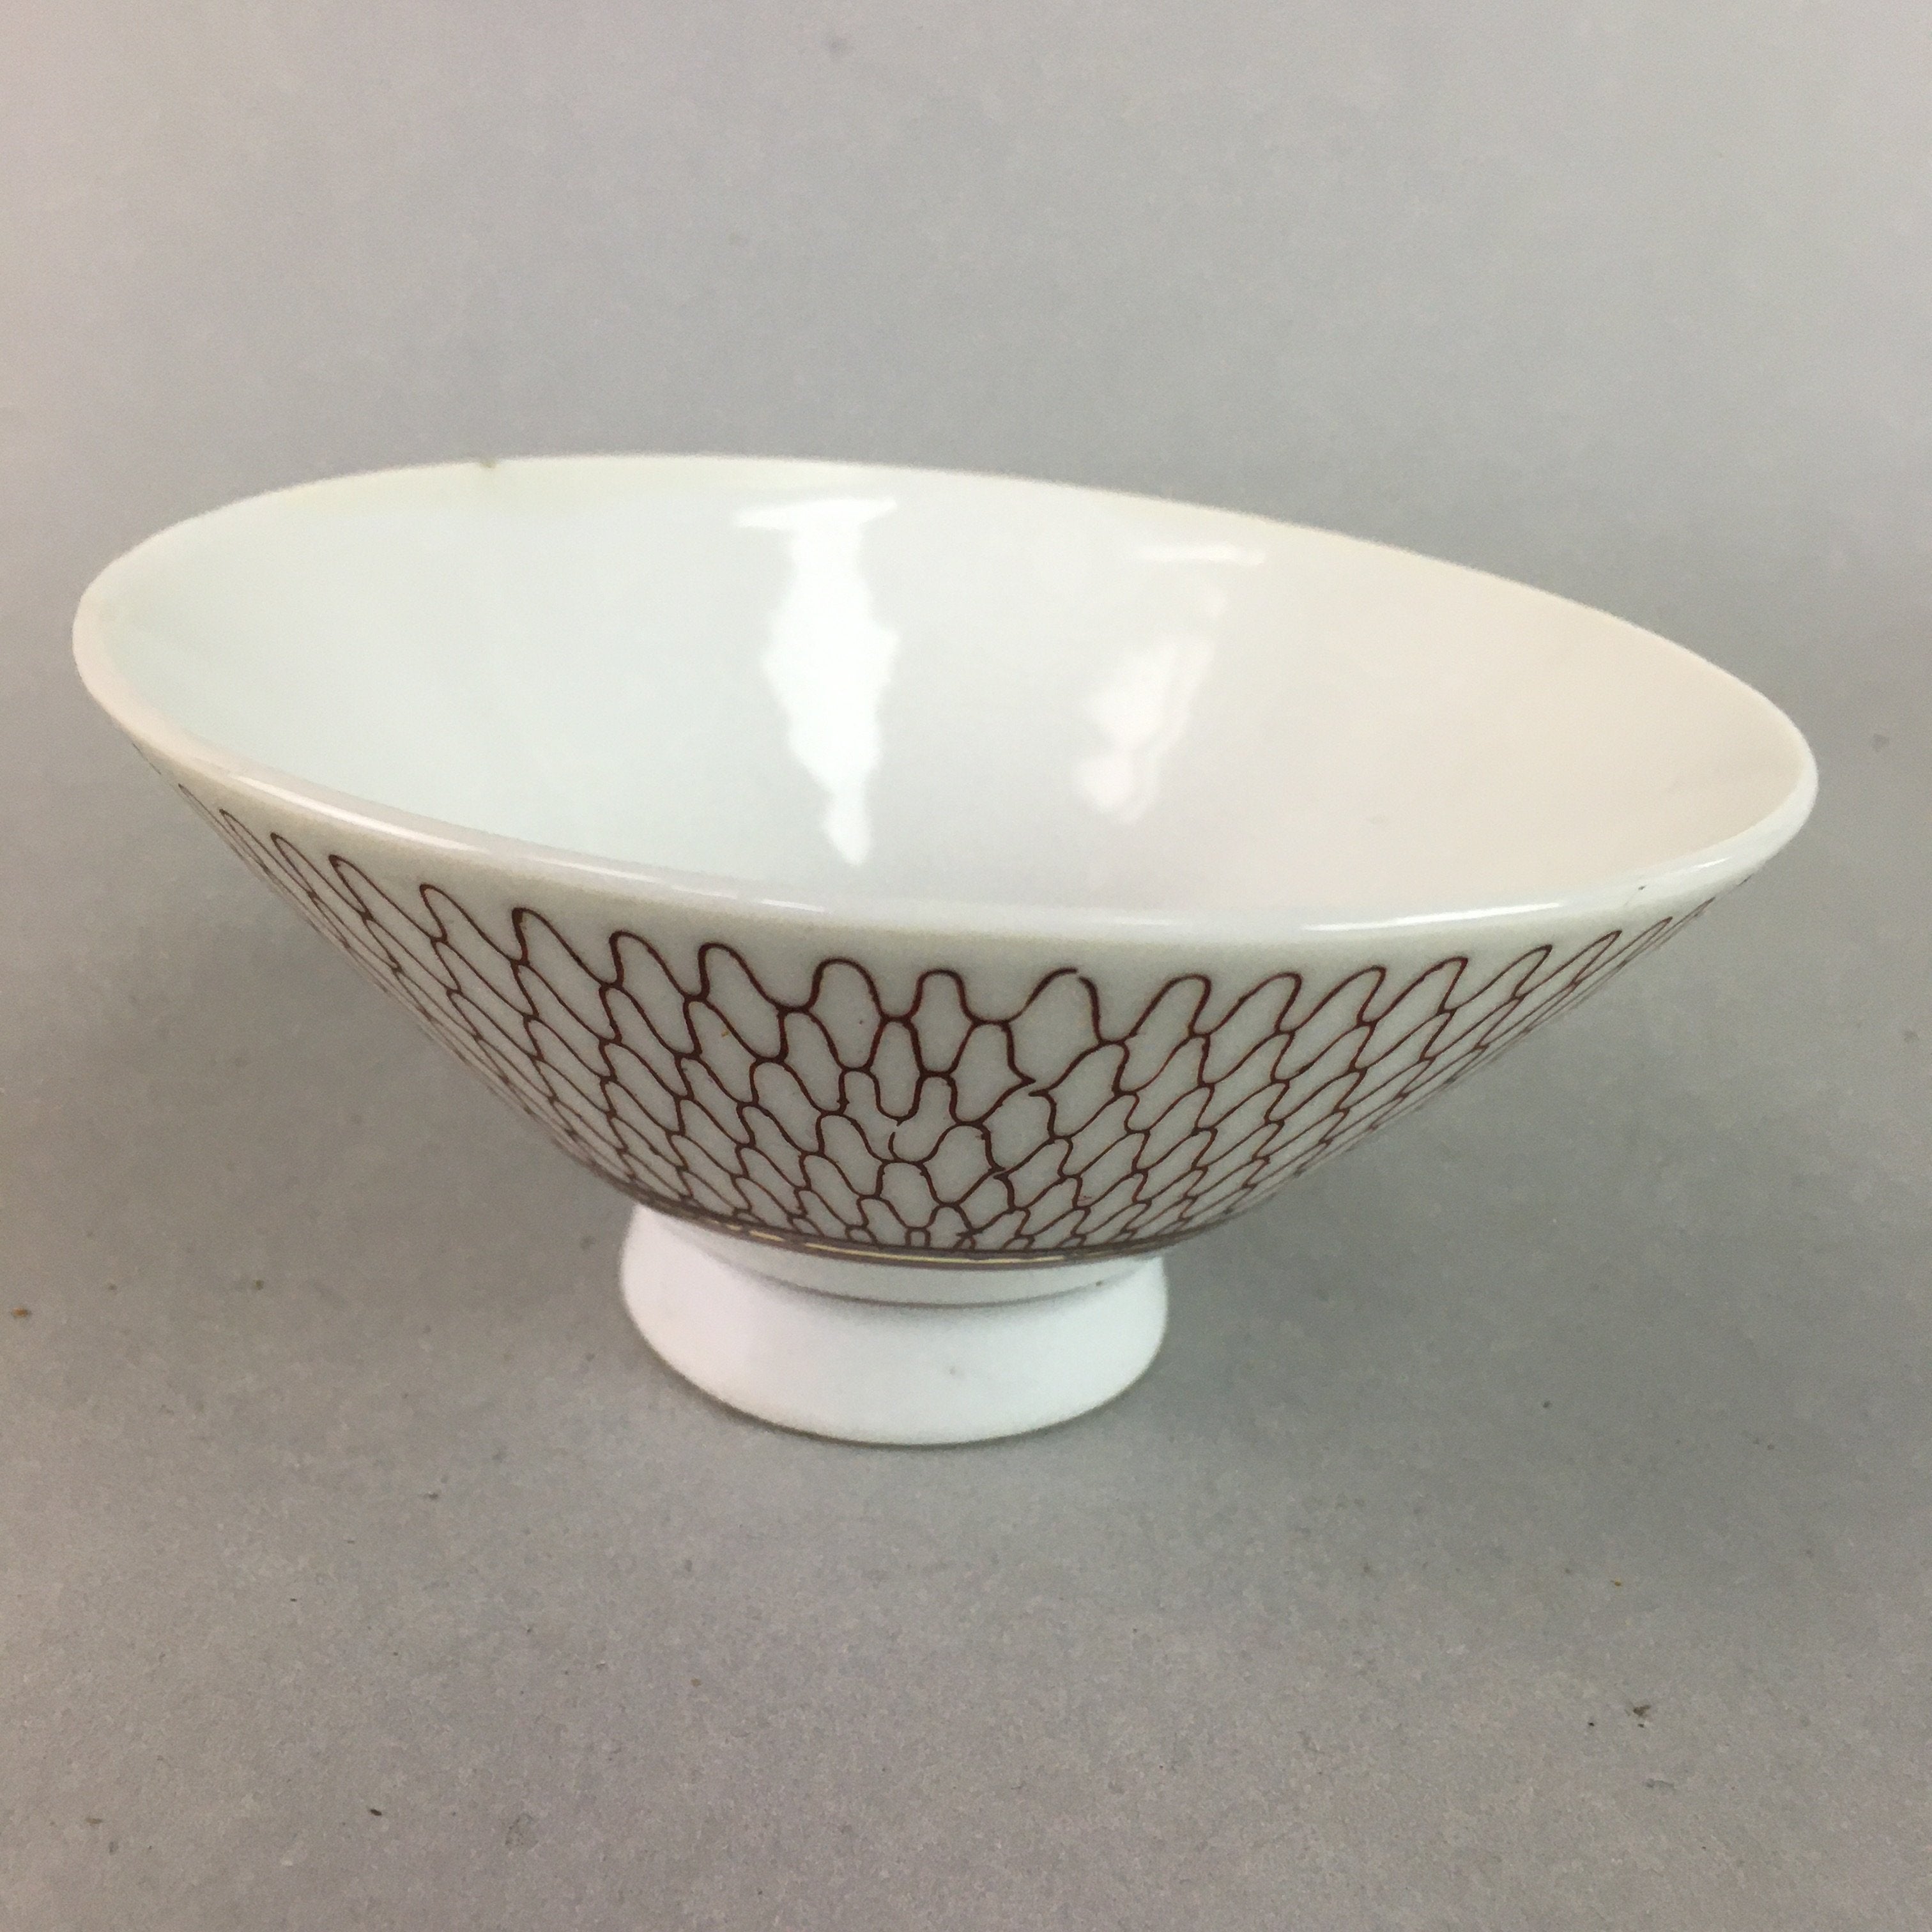 Japanese Porcelain Rice Bowl Vtg Chawan Red Geometric Net Pattern PP185